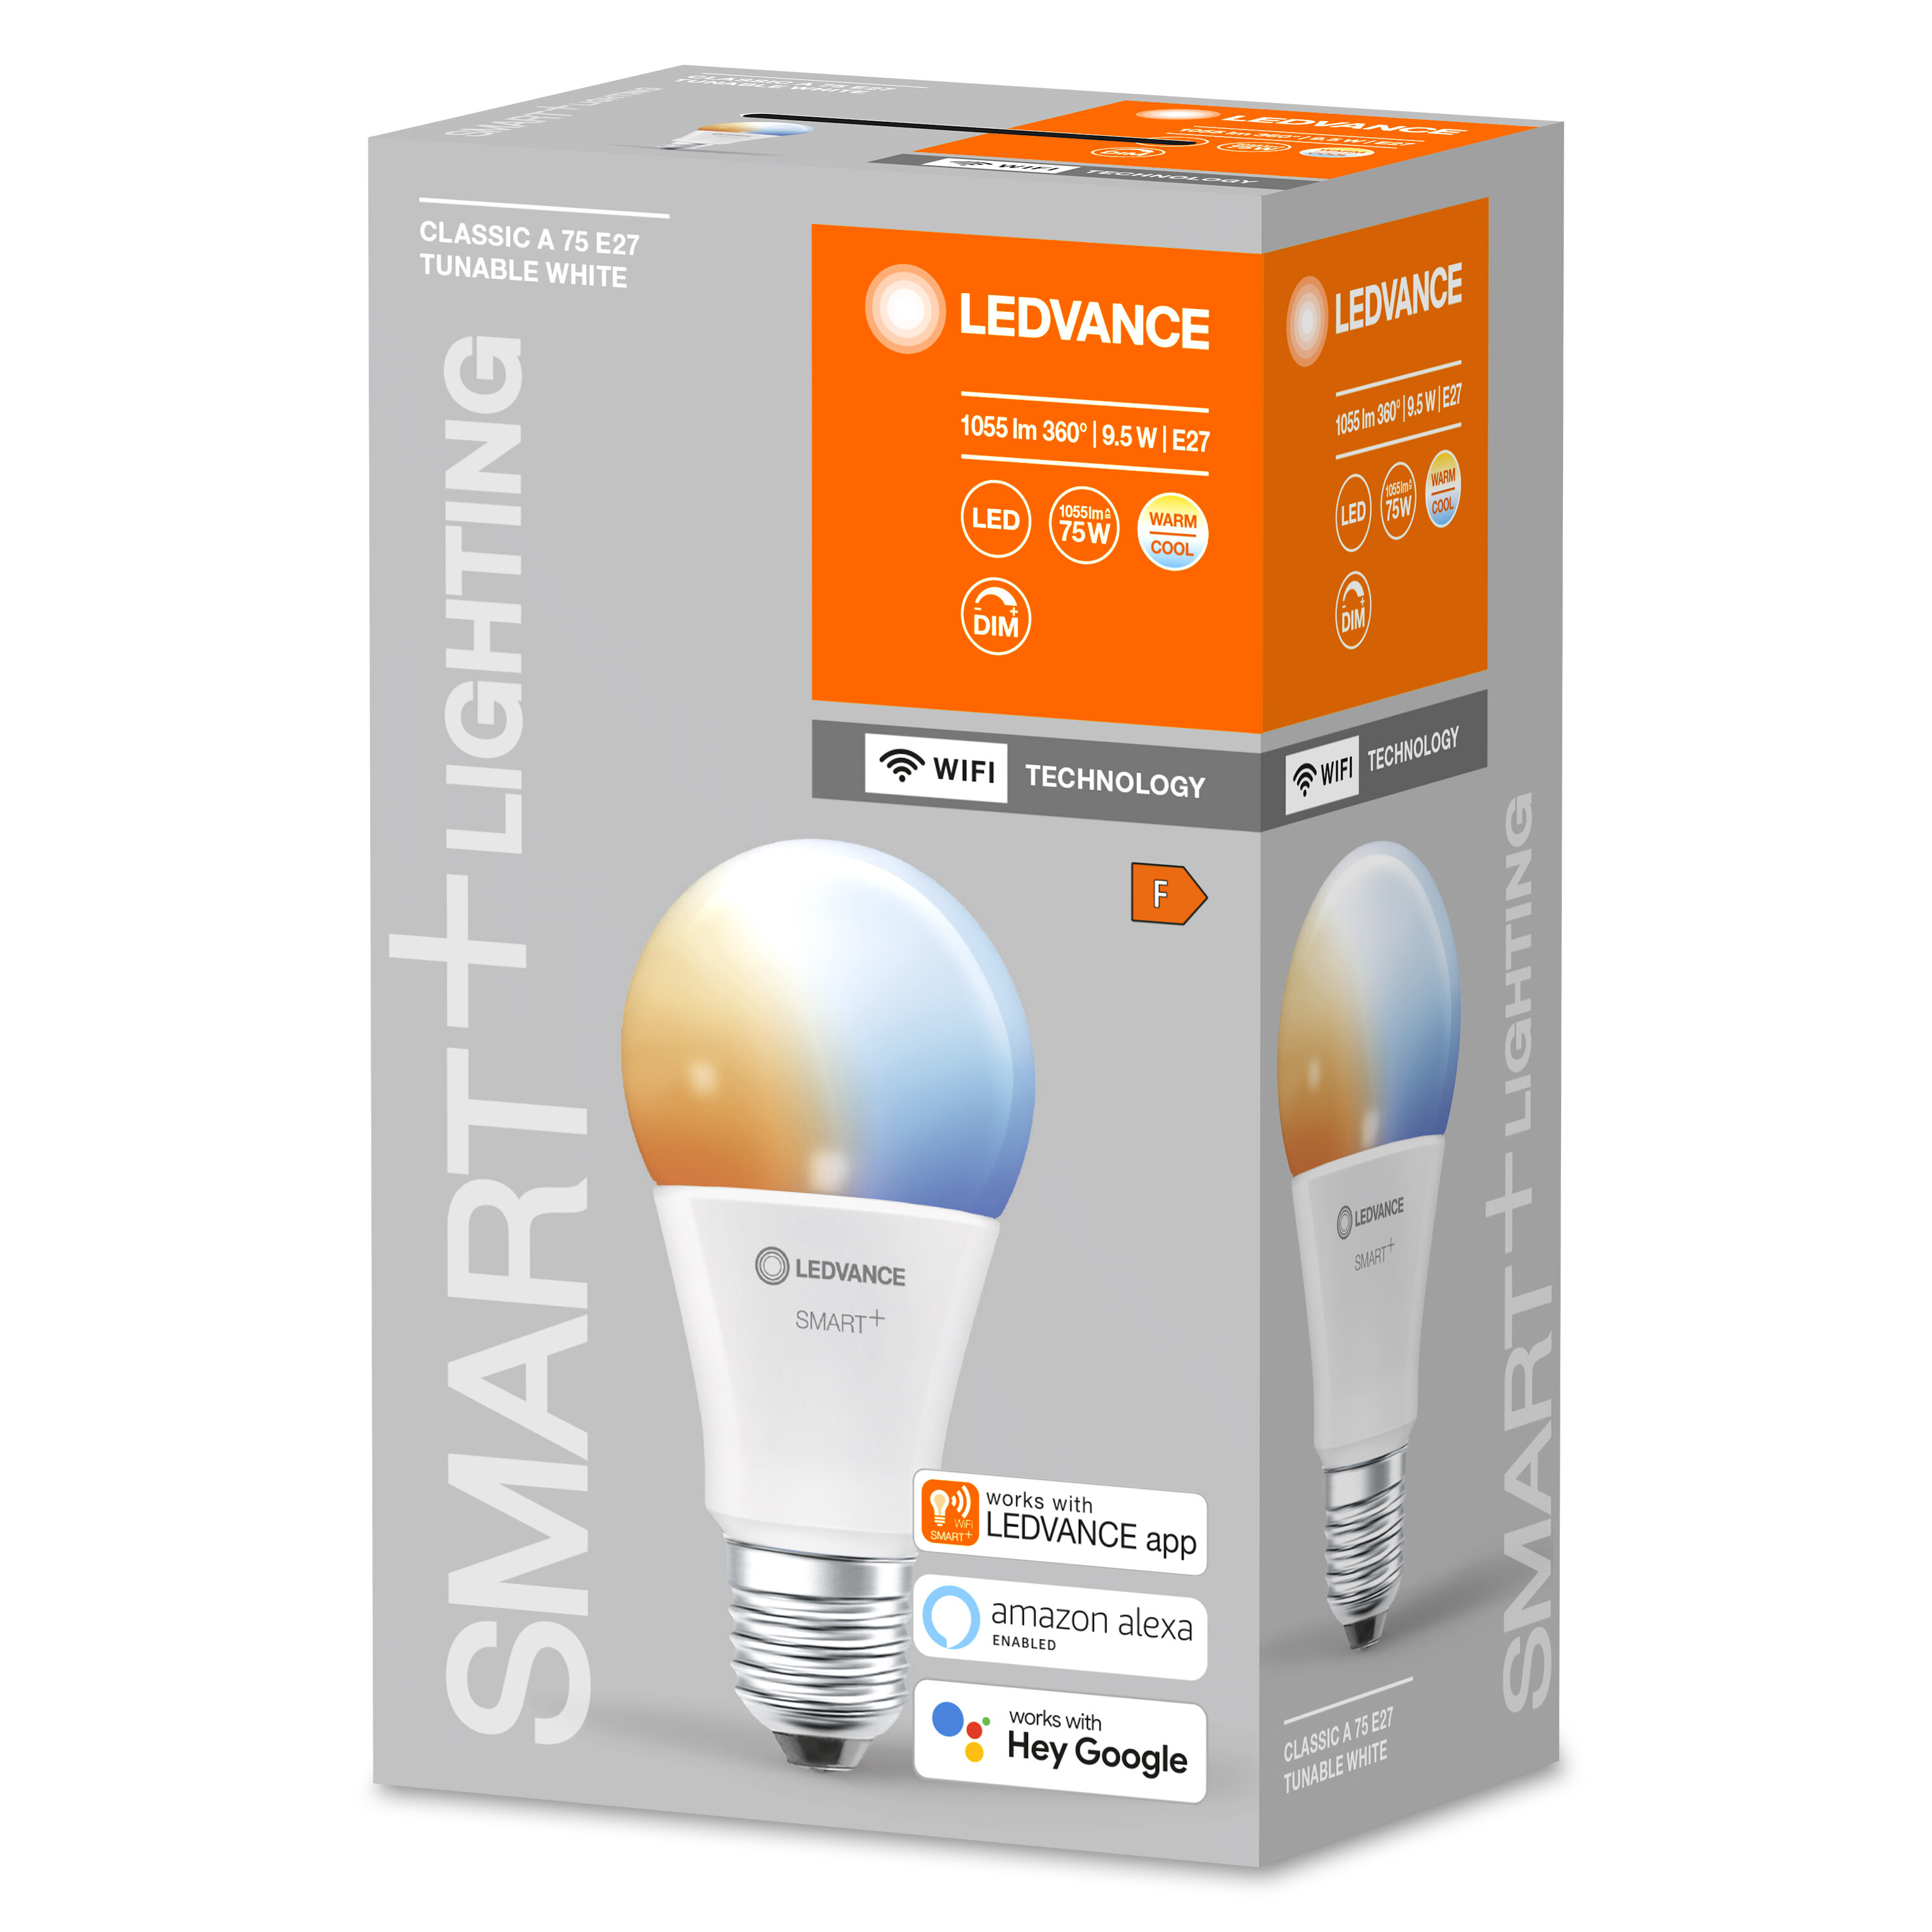 White Classic LED LEDVANCE WiFi Lampe SMART+ änderbar Lichtfarbe Tunable